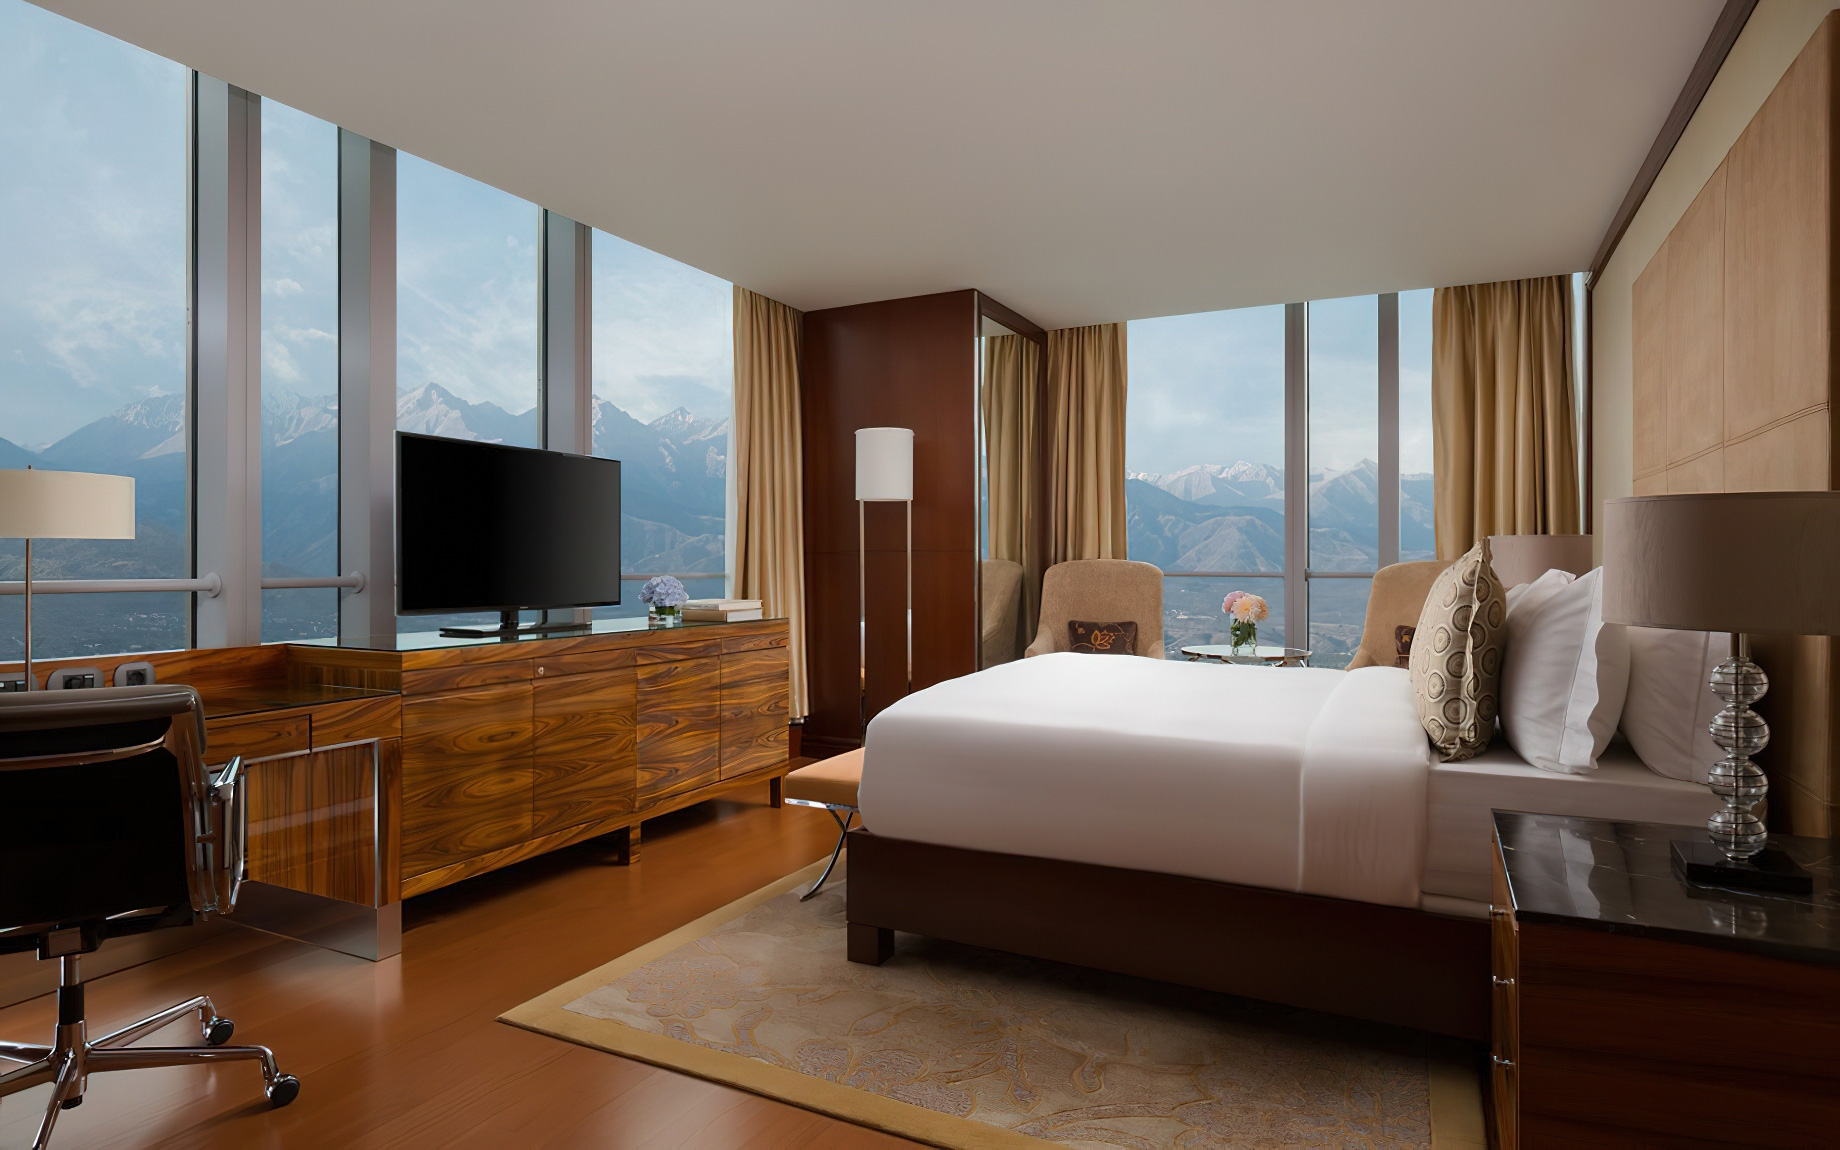 The Ritz-Carlton, Almaty Hotel - Almaty, Kazakhstan - Grand Deluxe Room